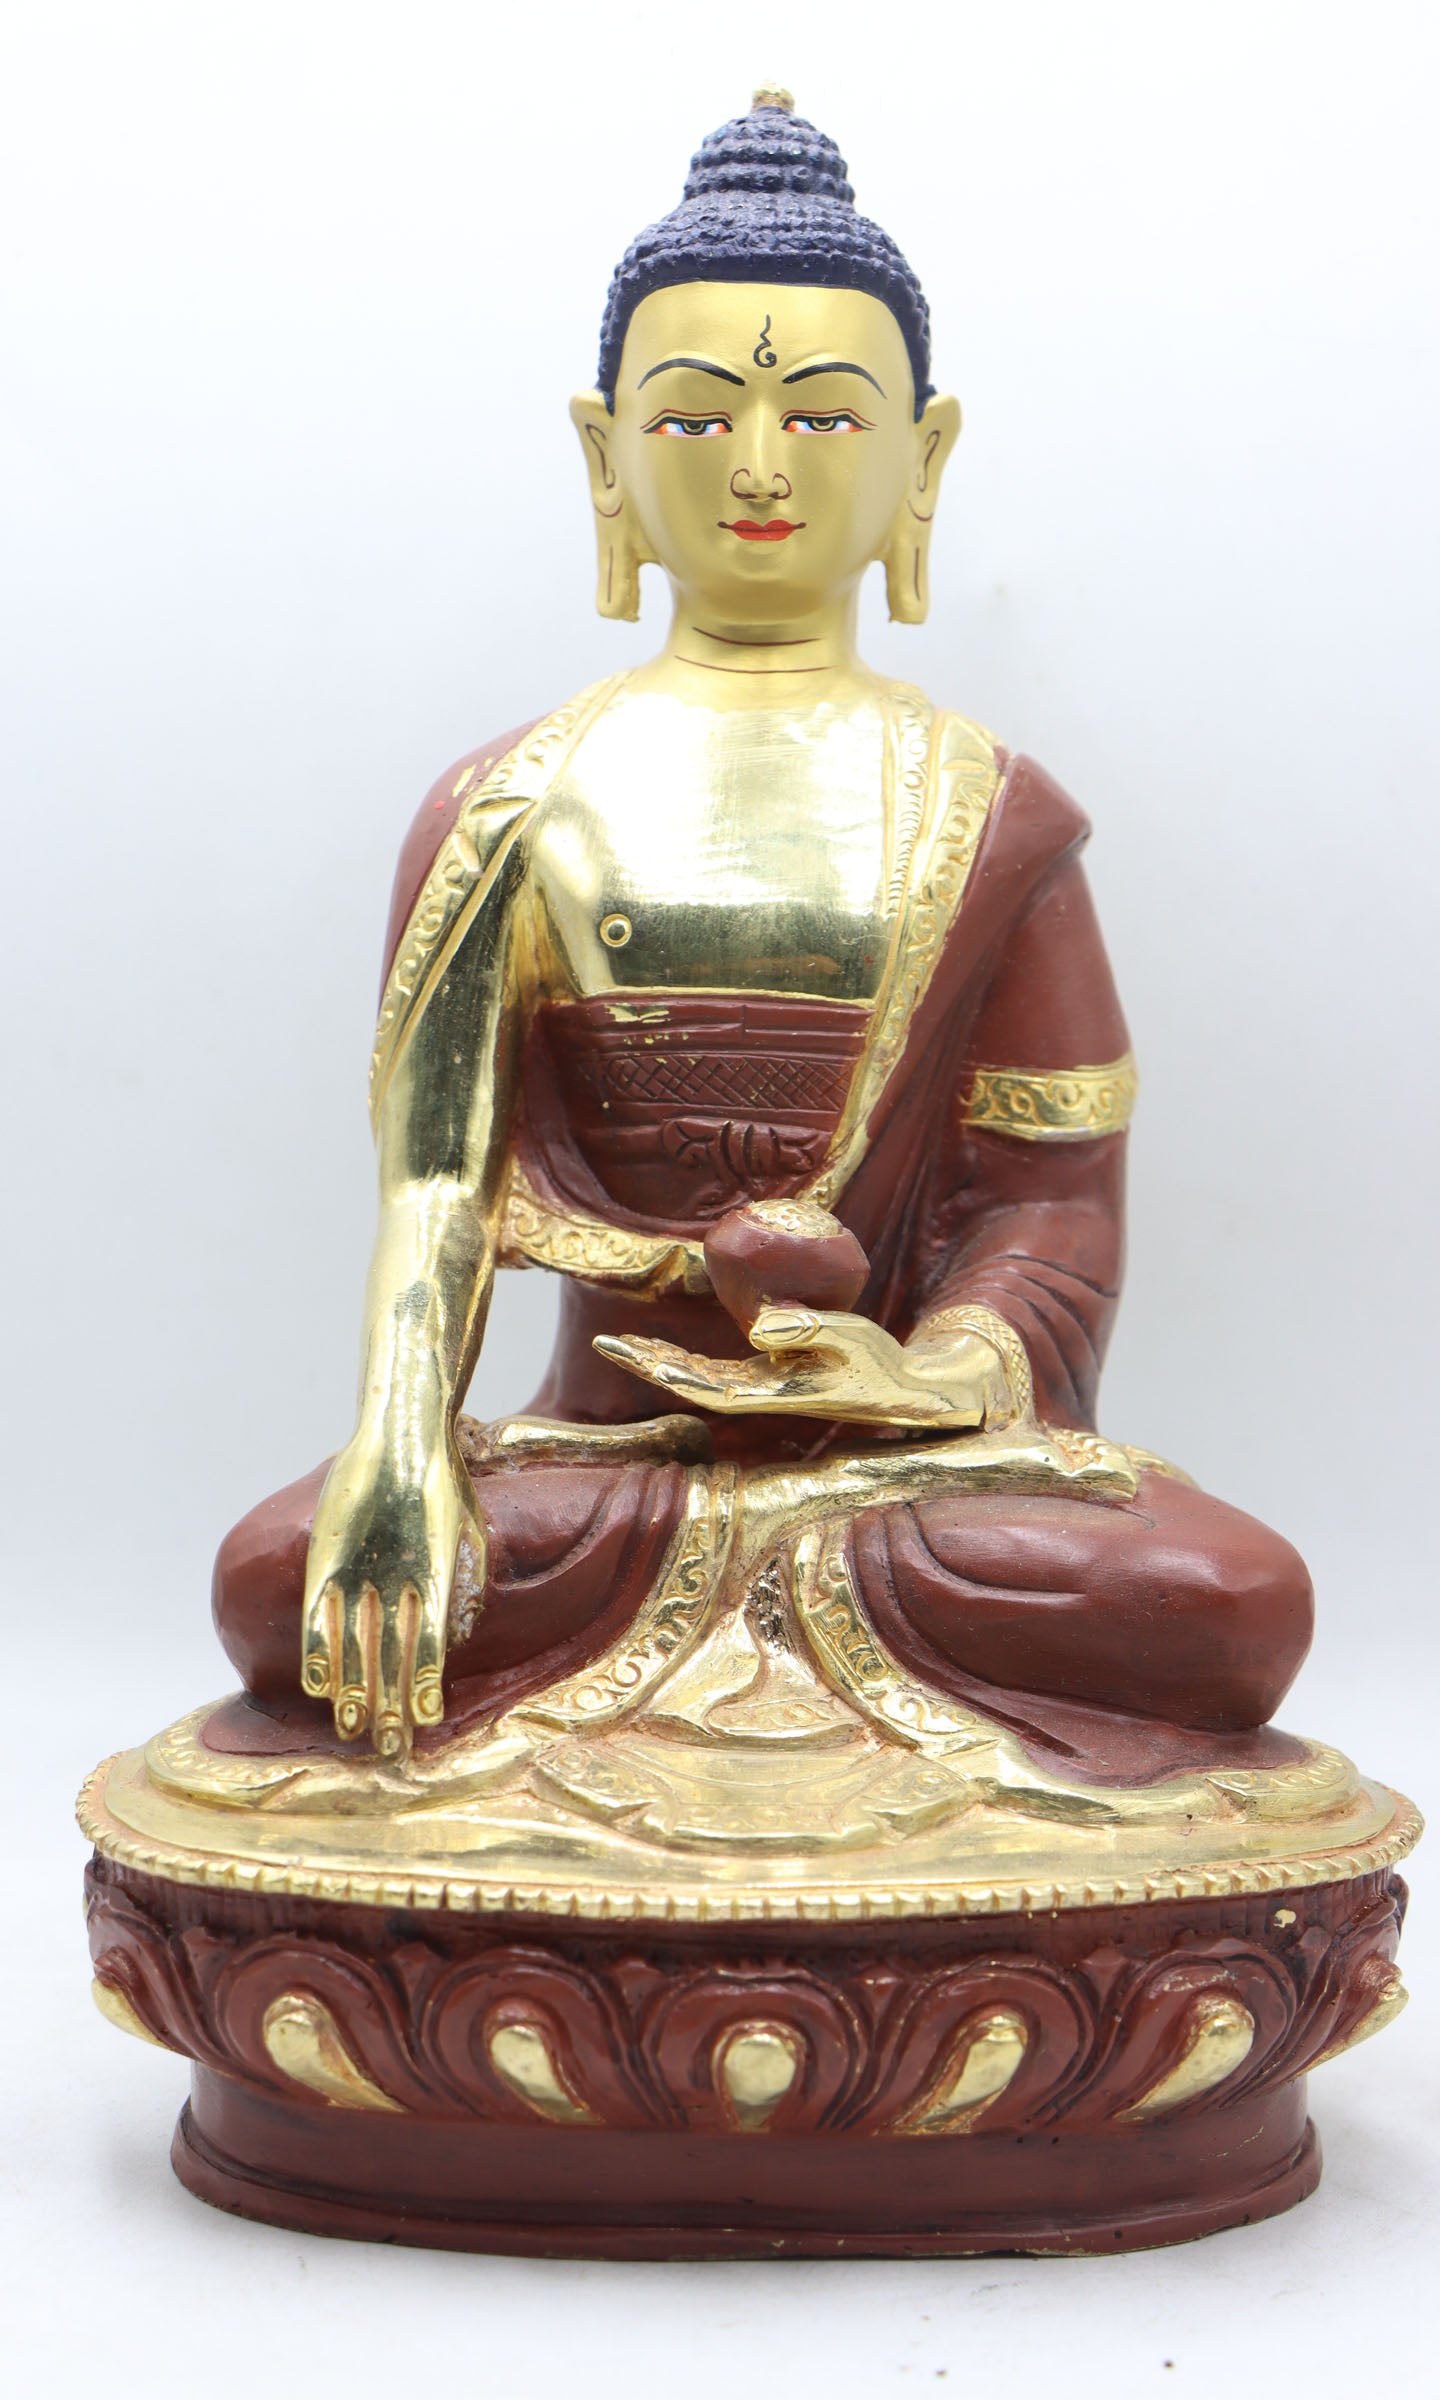 Shakyamuni Buddha statues  serves as objects of reverence and inspiration. 